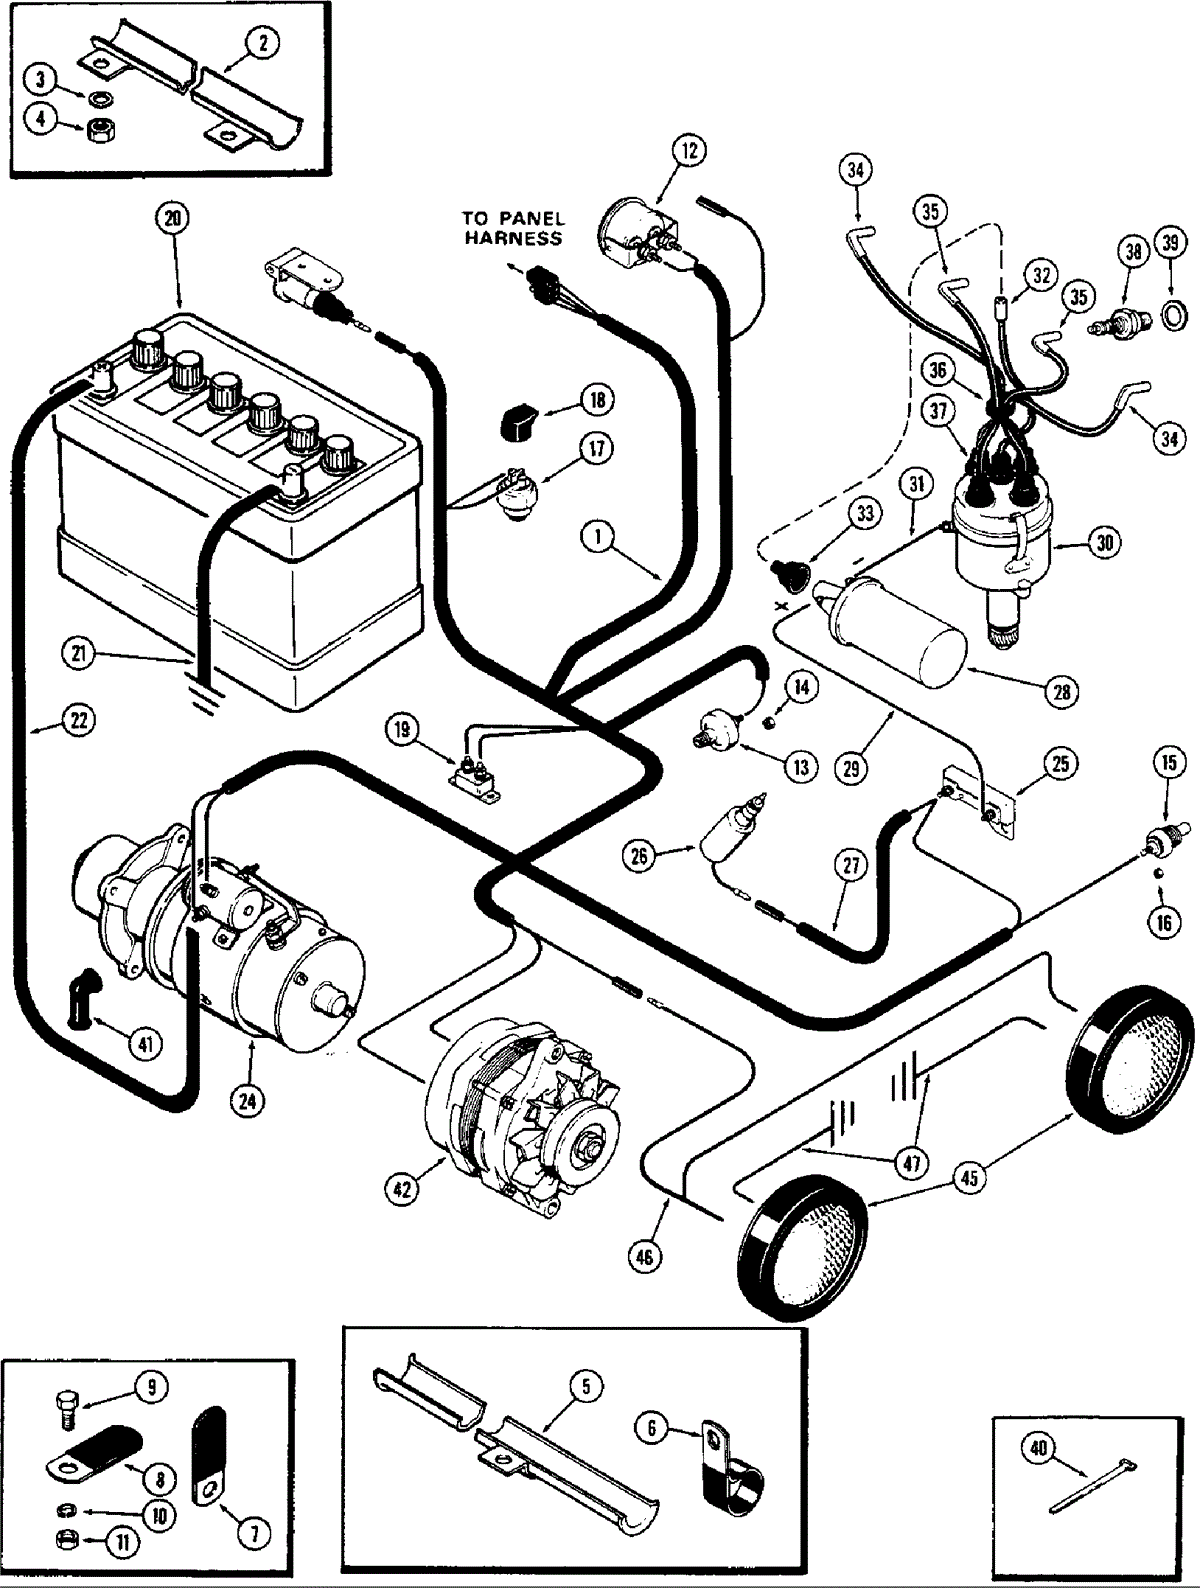 Ford 555b Backhoe Parts Diagram